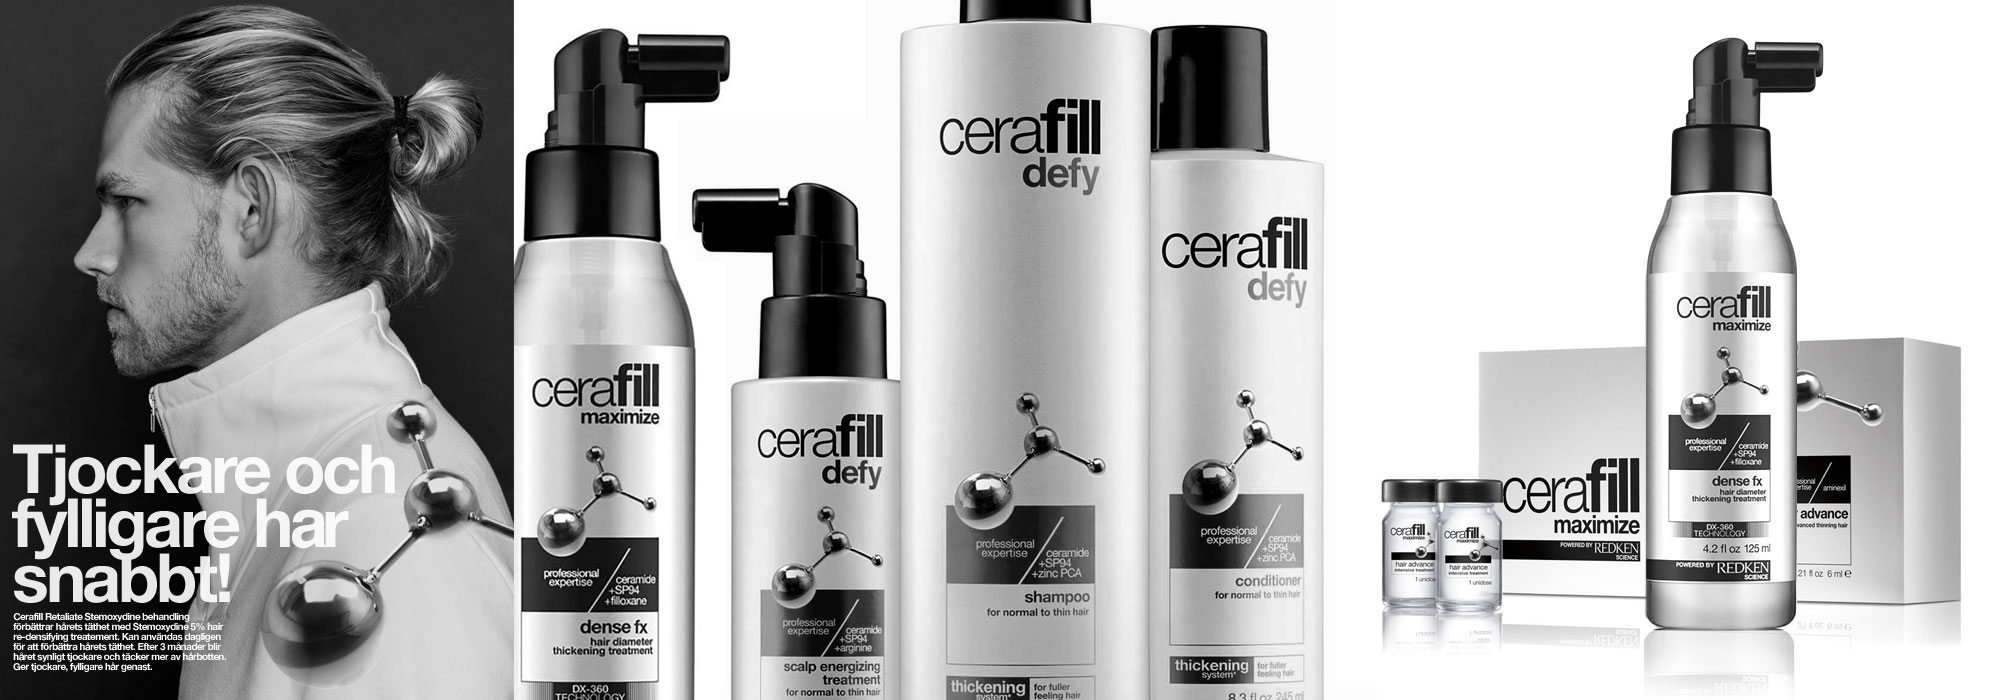 Cerafill branding and packaging designed by MPAKT